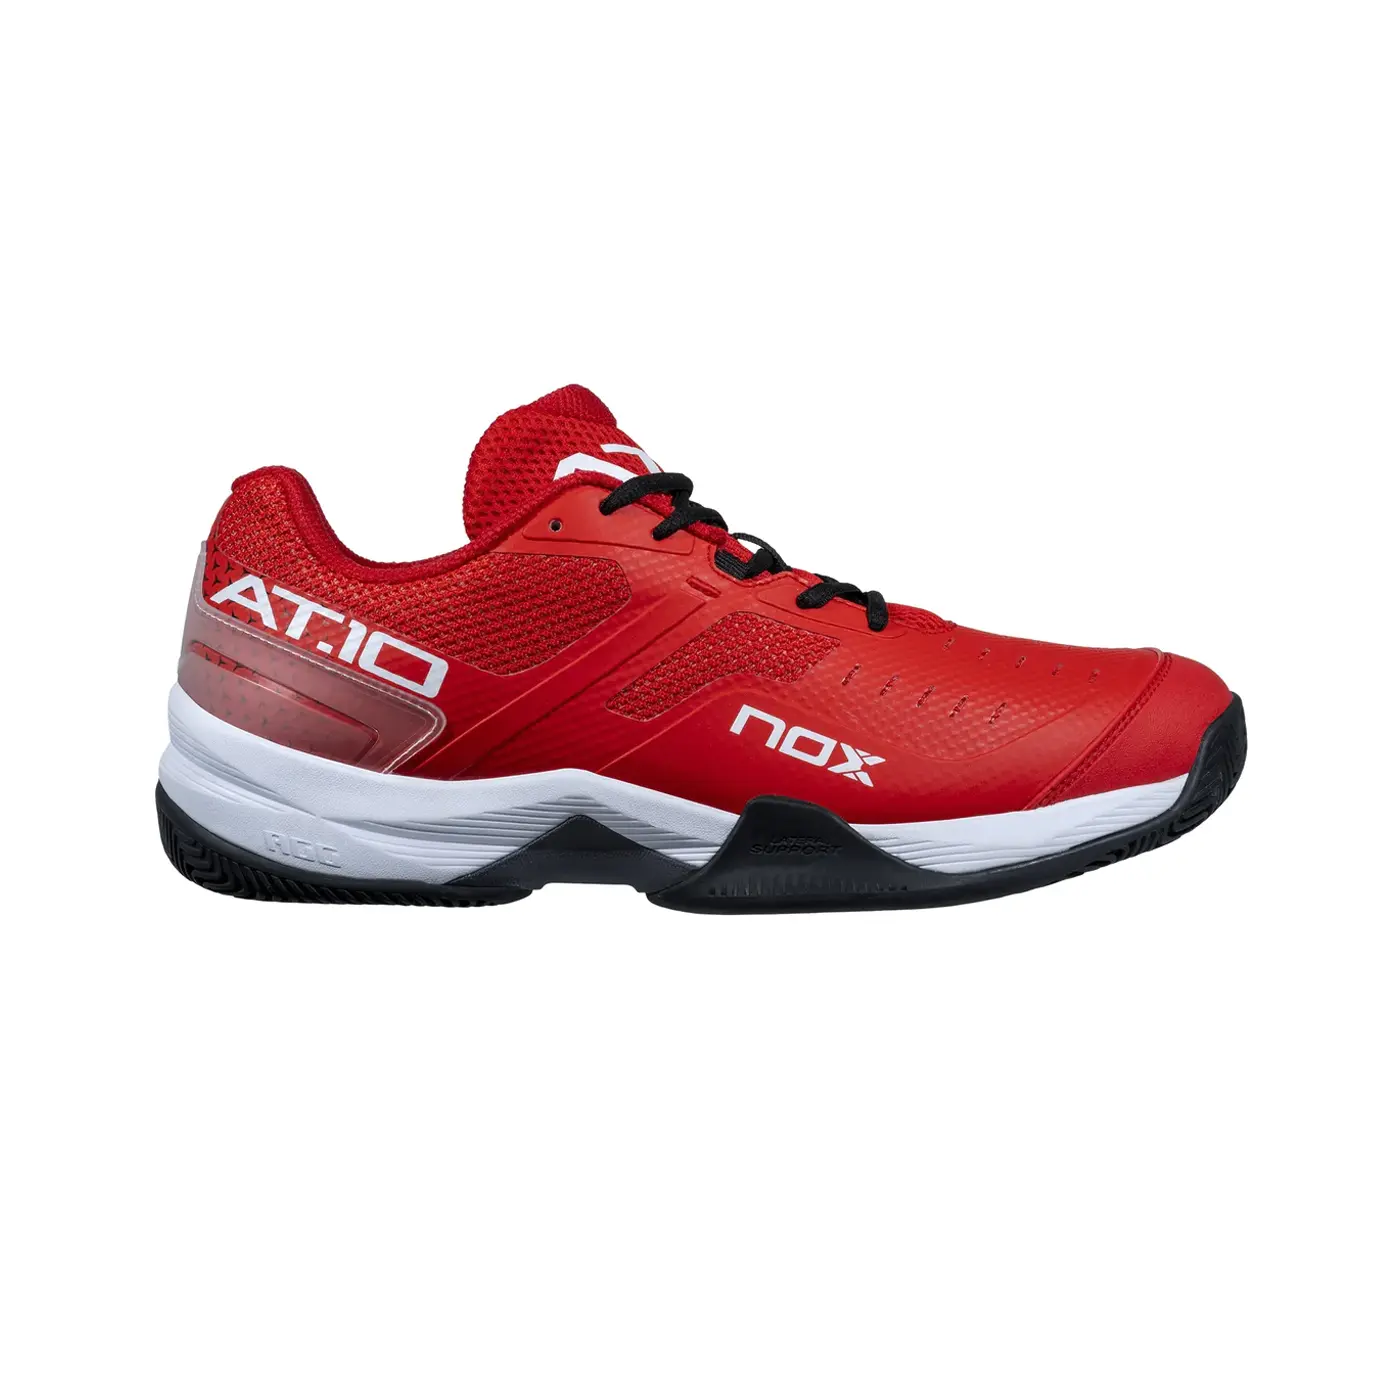 Nox Padel Shoes AT10 RedBlack